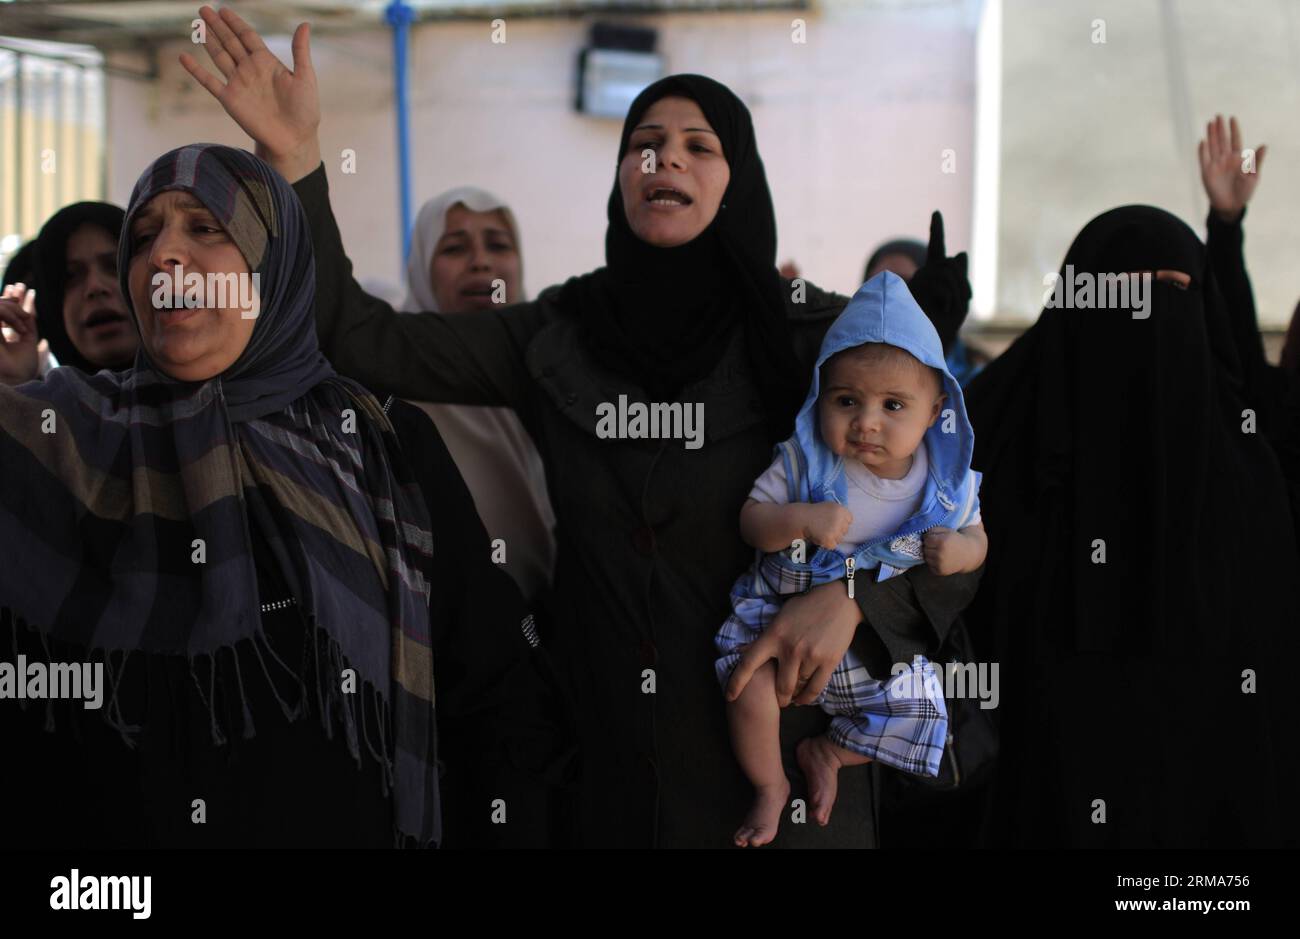 (140621) -- Gaza, June 21, 2014 (Xinhua) -- Relatives of a Palestinian ...